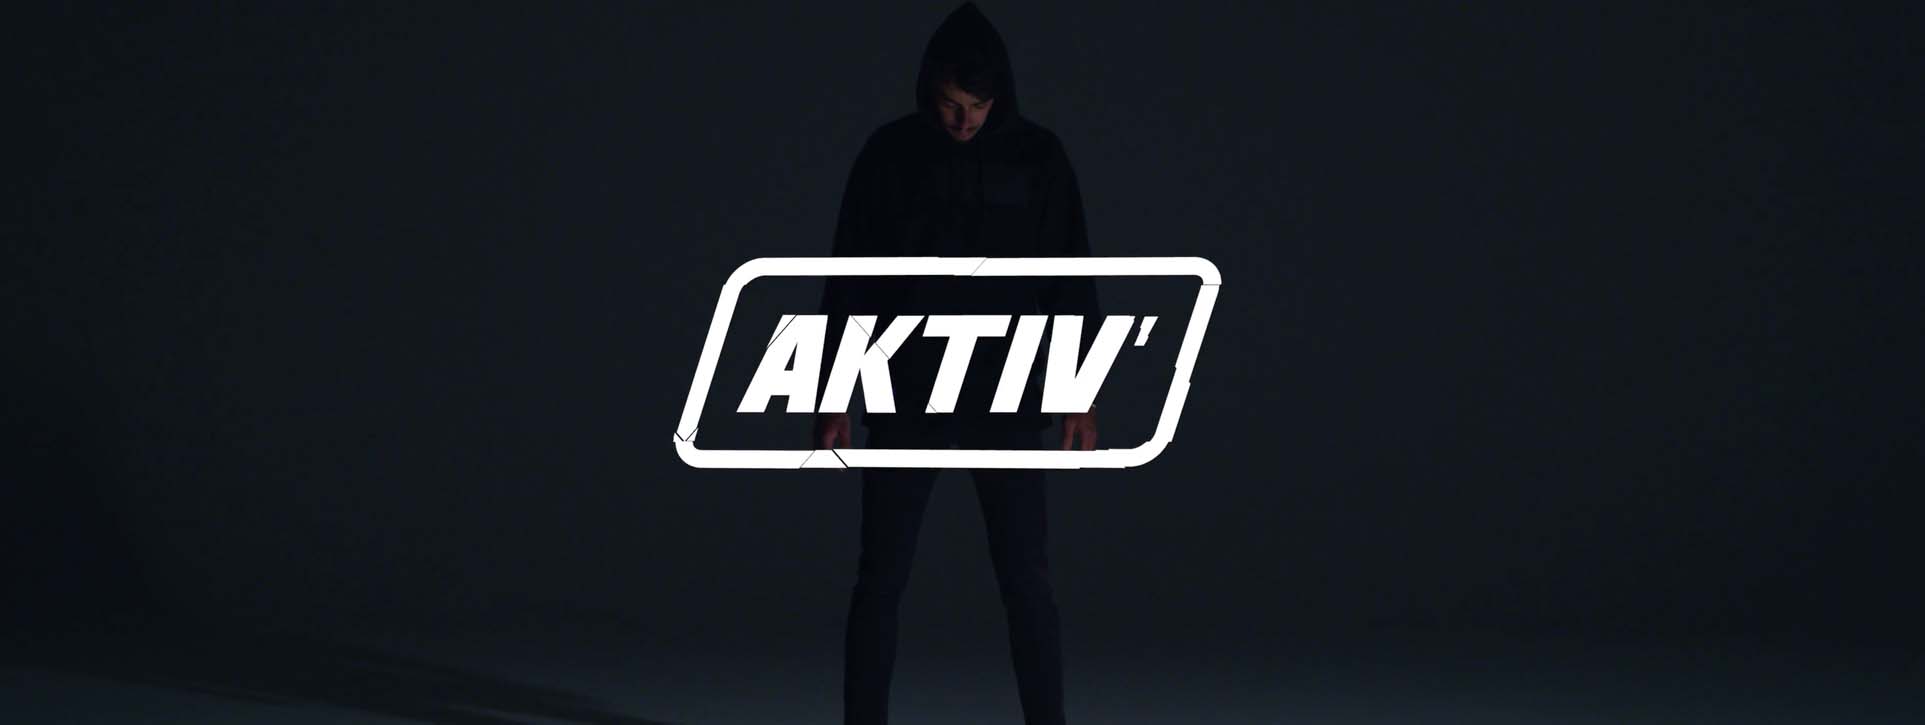 Training needs comfortable pants : AKTIV